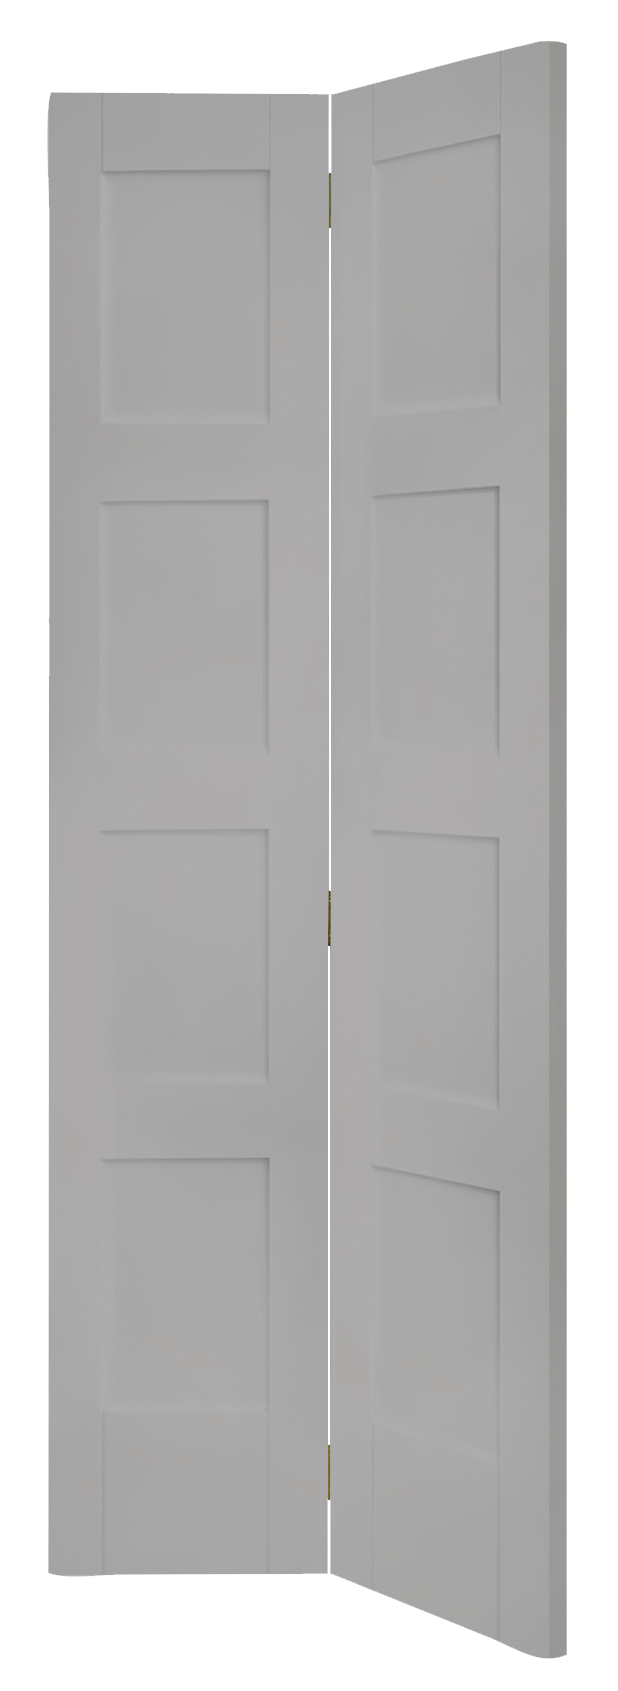 Shaker 4 Panel Bi-Fold Internal White Primed Door – Storm, 1981 x 686 x 35 mm